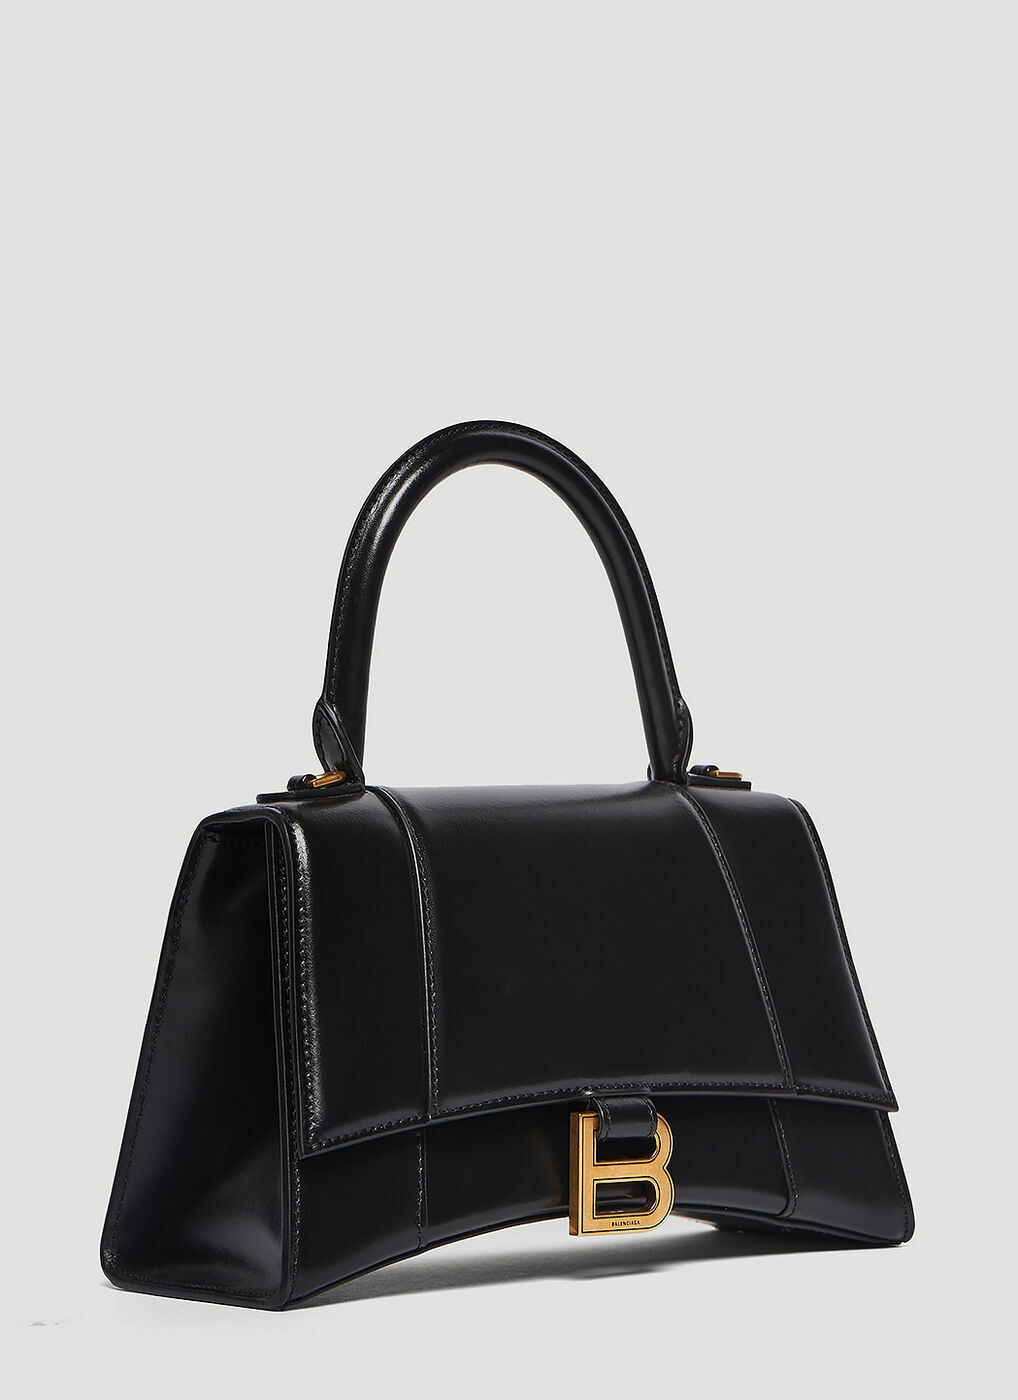 Hourglass Handbag in Black Balenciaga